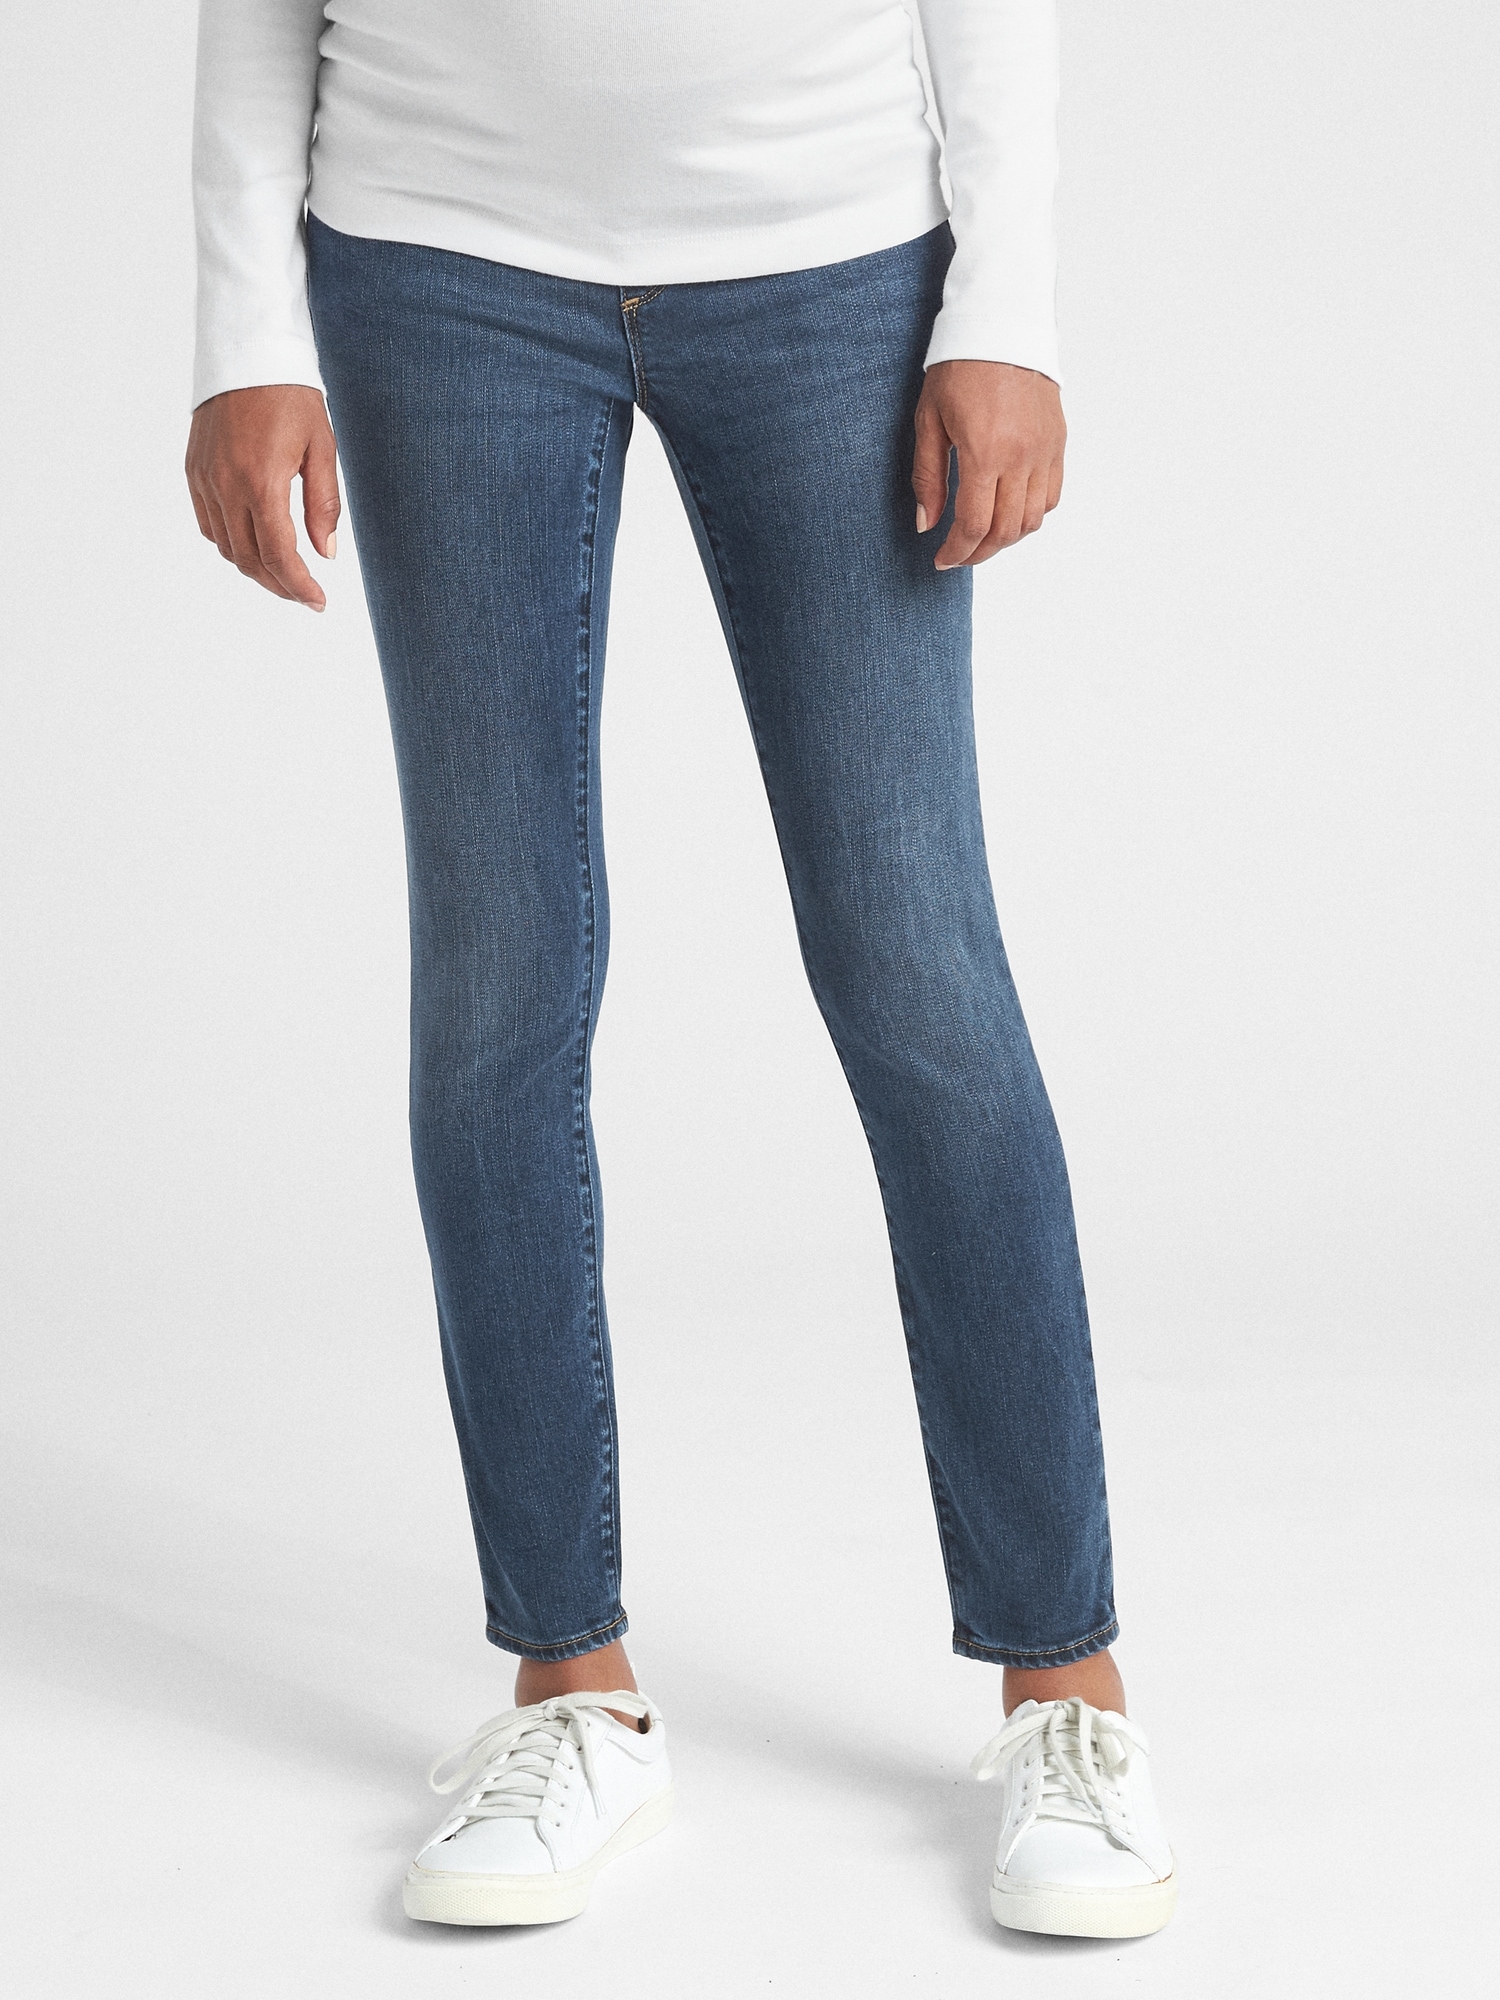 true skinny jeans gap